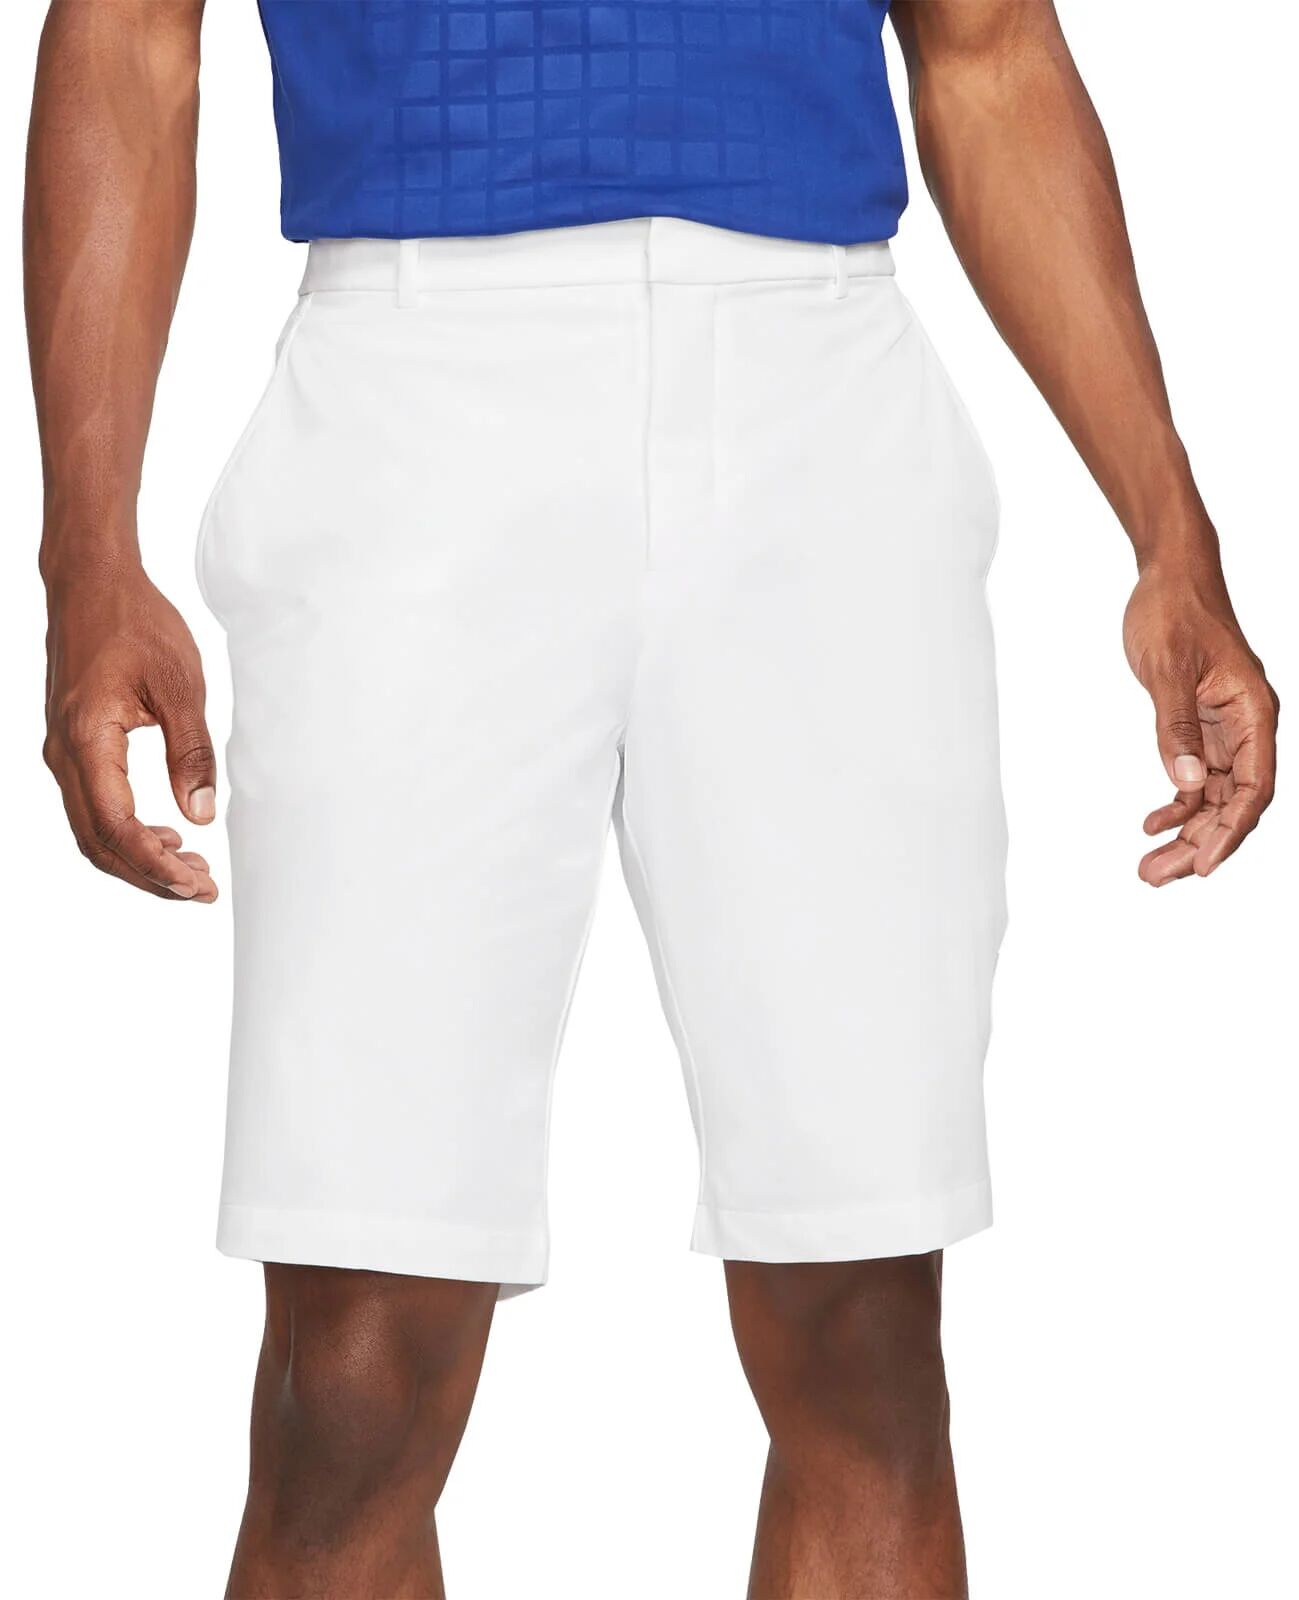 Nike Dri-FIT Men's Golf Shorts - White, Size: 32